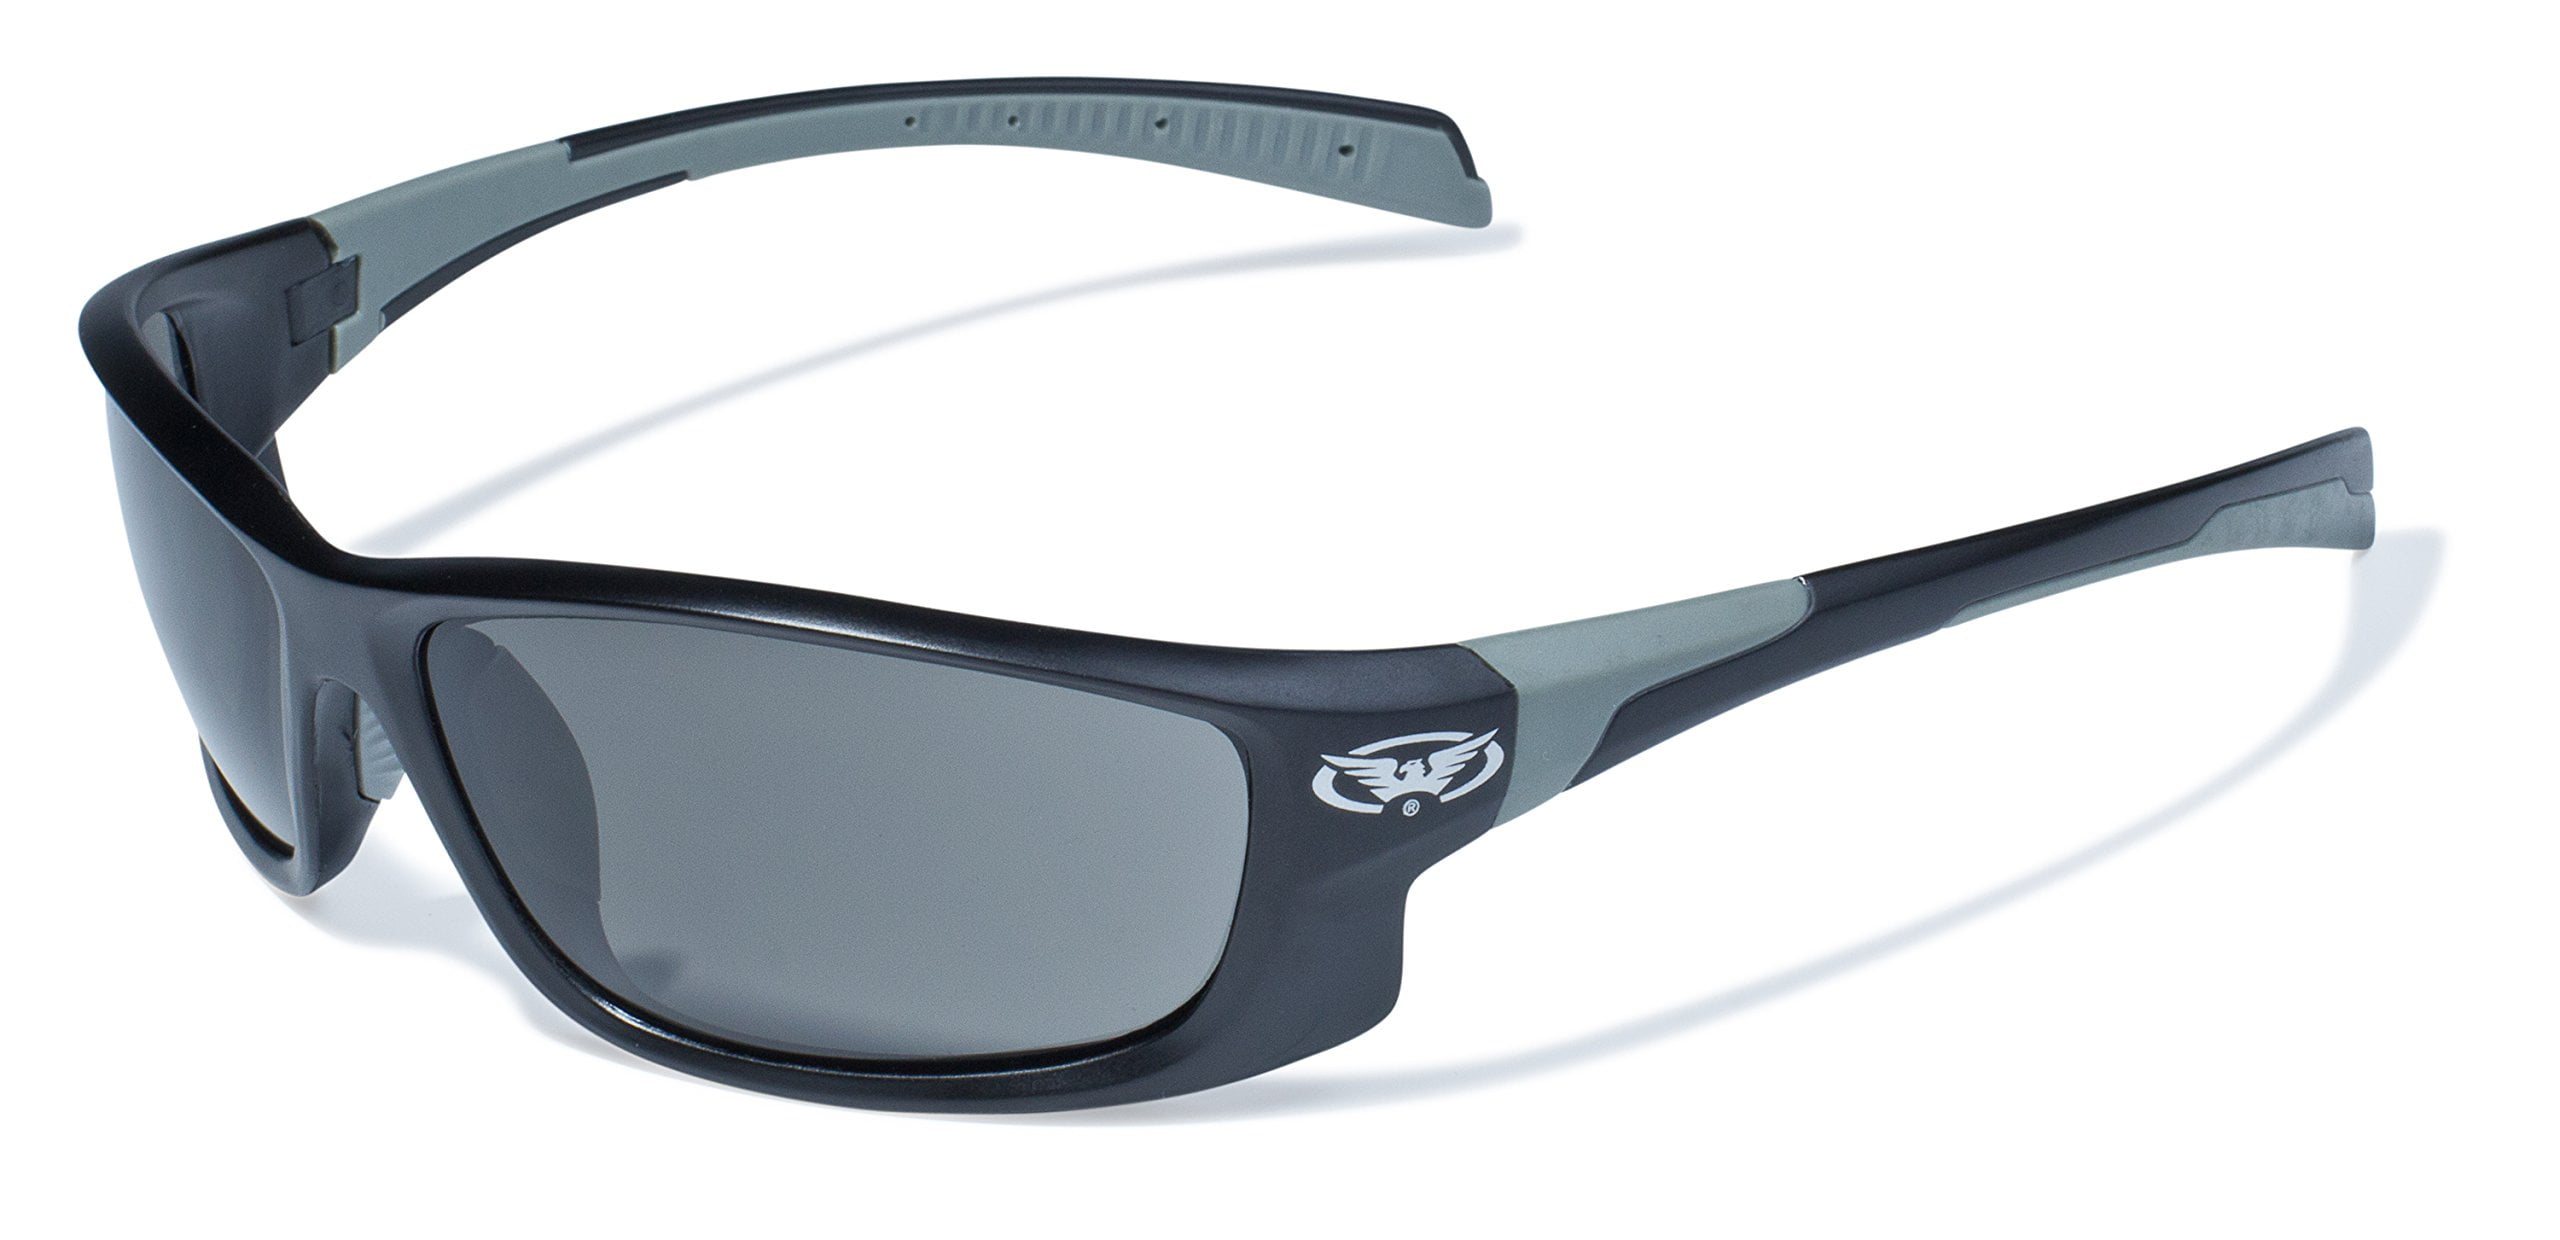 2 Global Vision Hercules 5 Safety Glasses Matte Black Frame Clear & Smoke Lens 